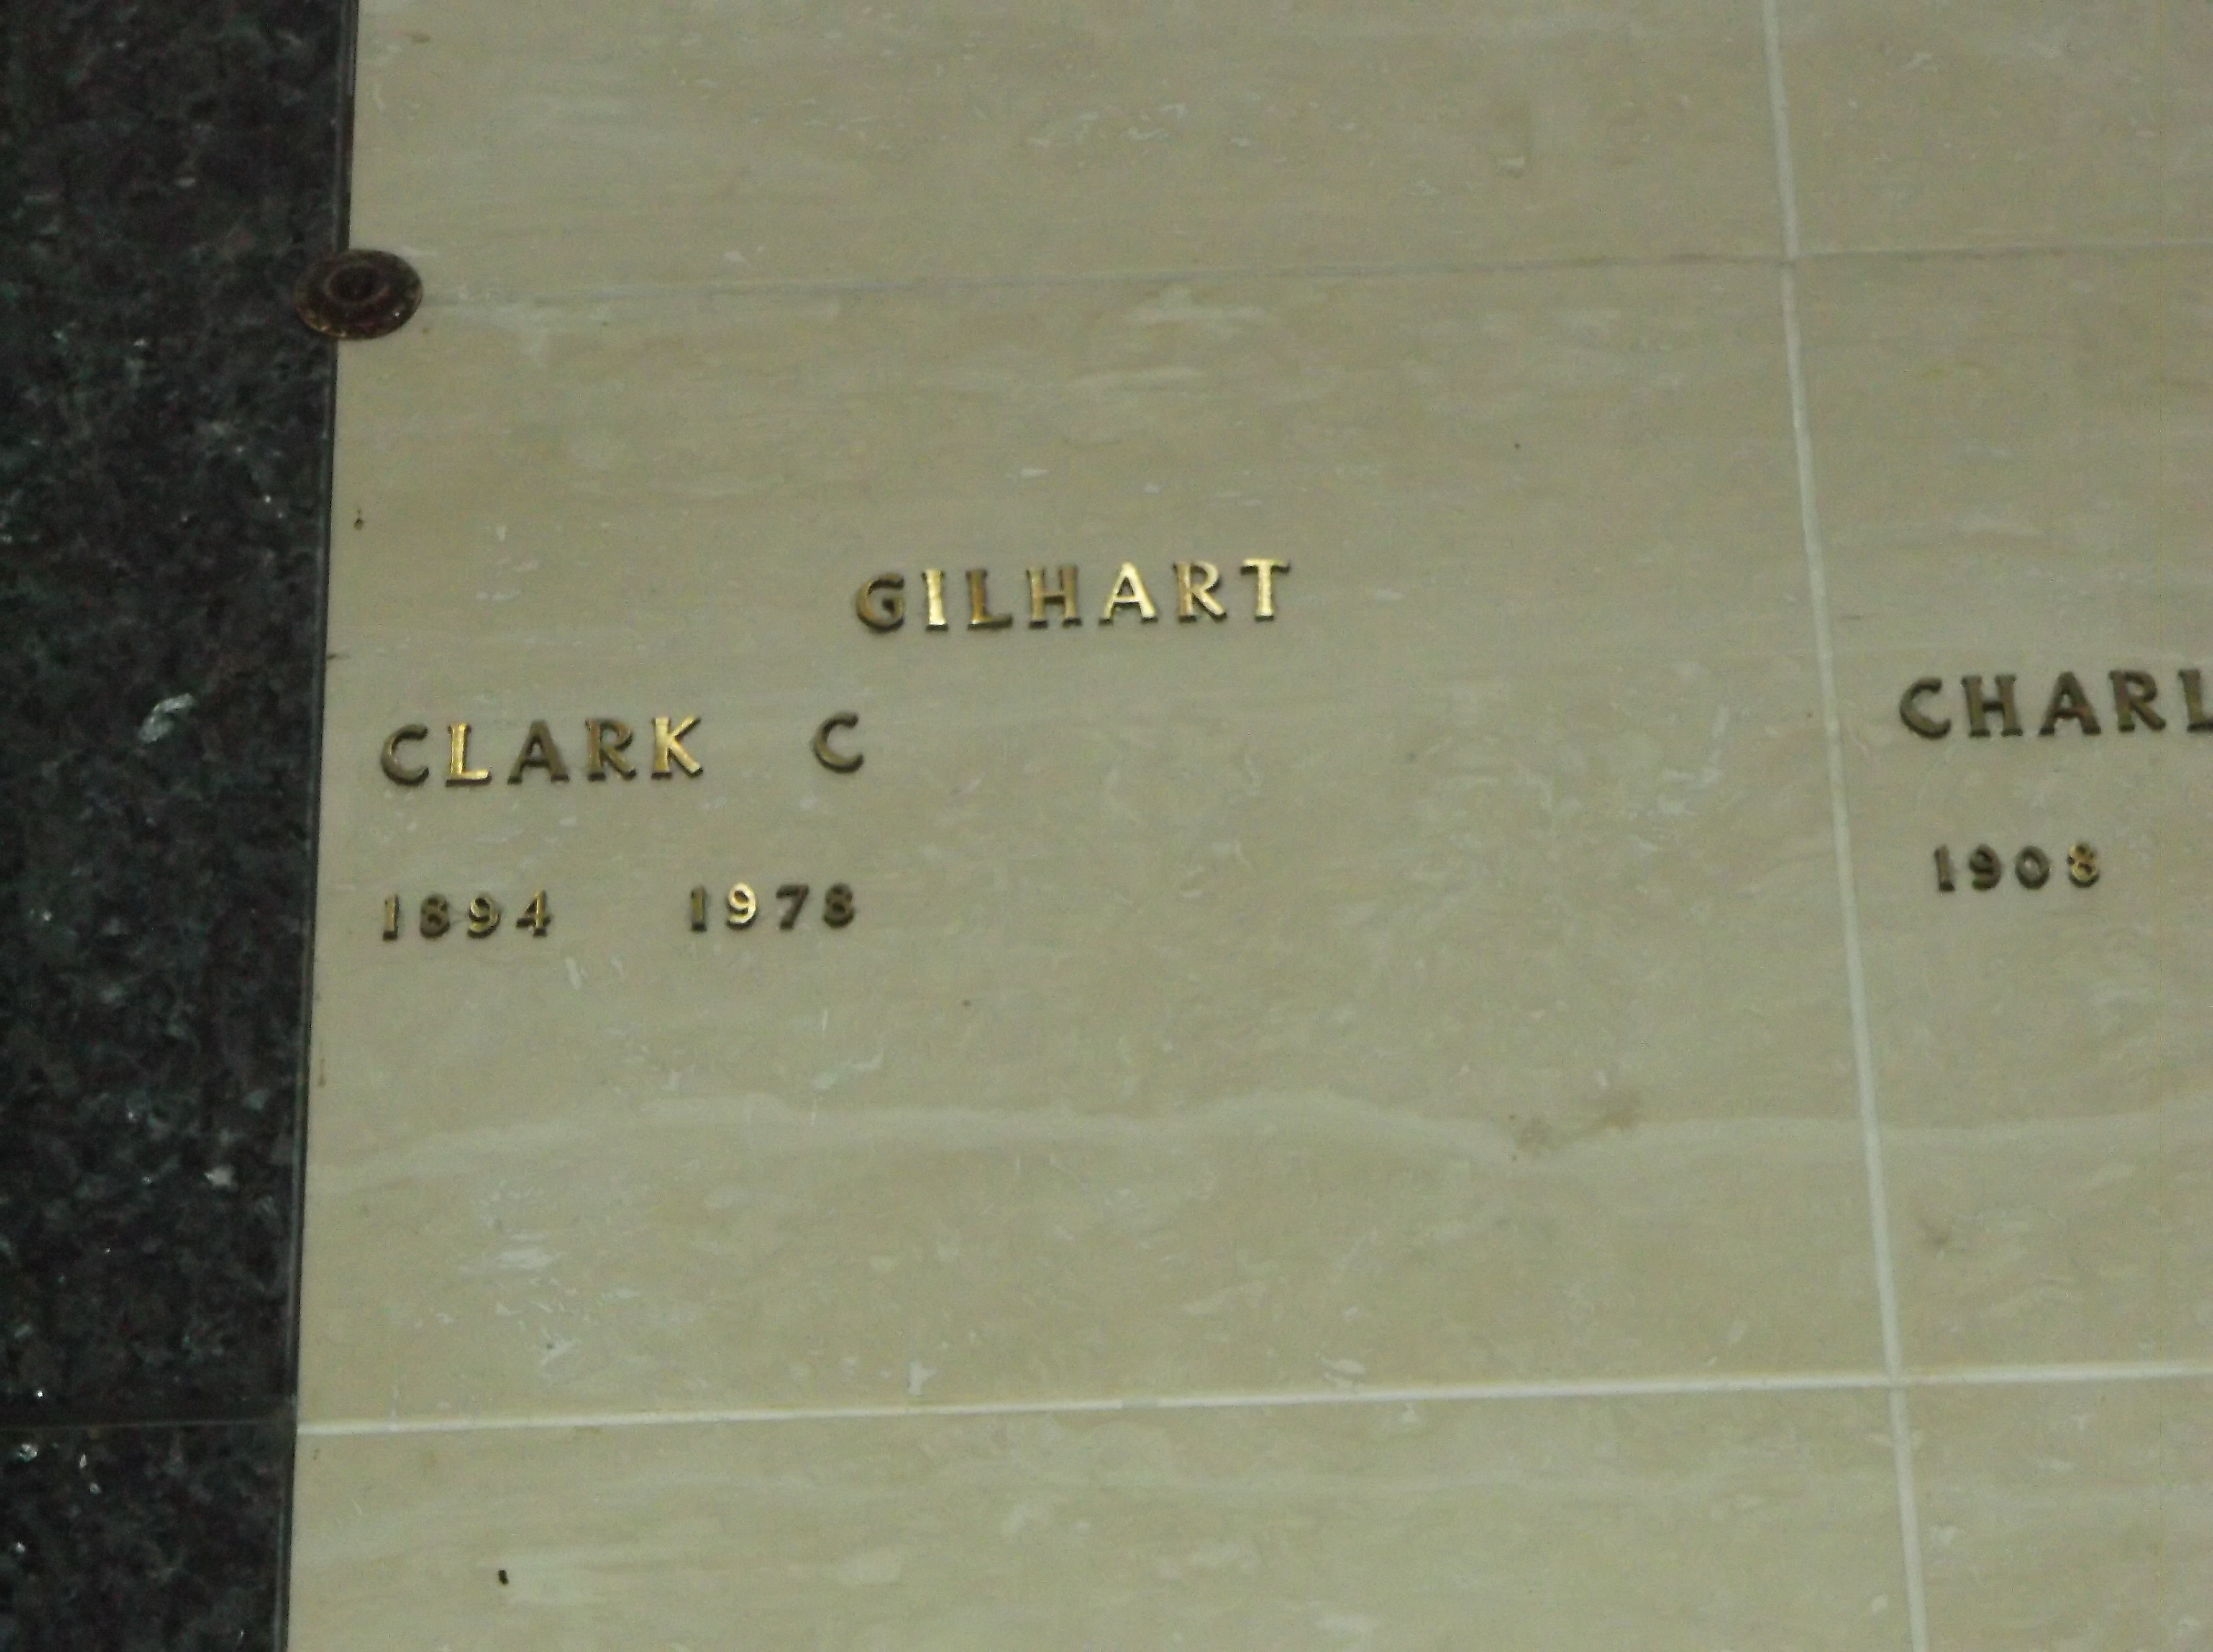 Clark C Gilhart